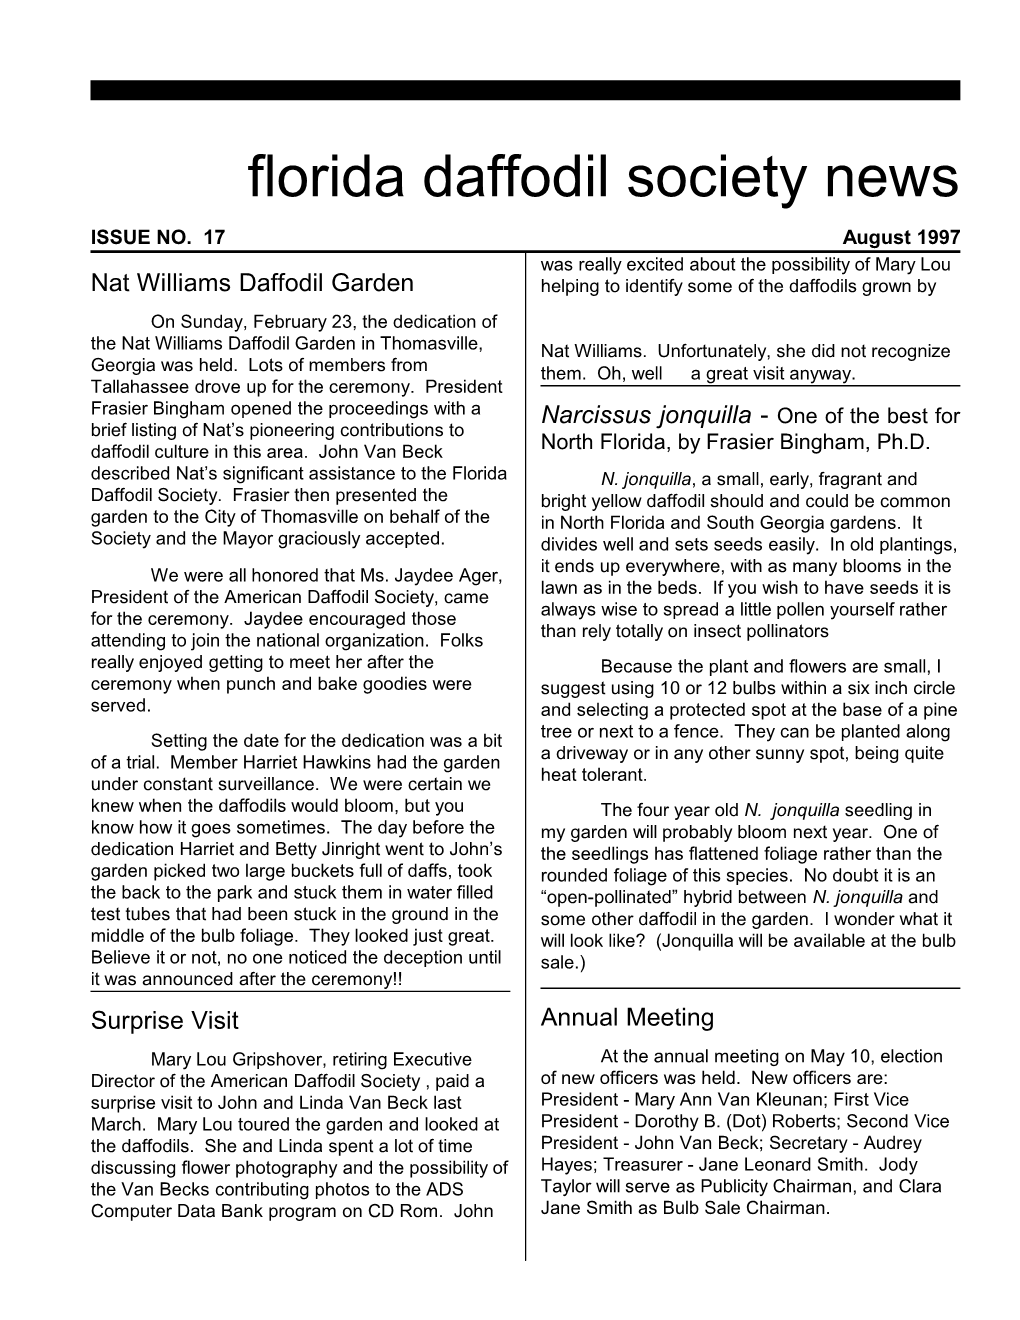 1997 August, Florida Daffodil Society Newsletter